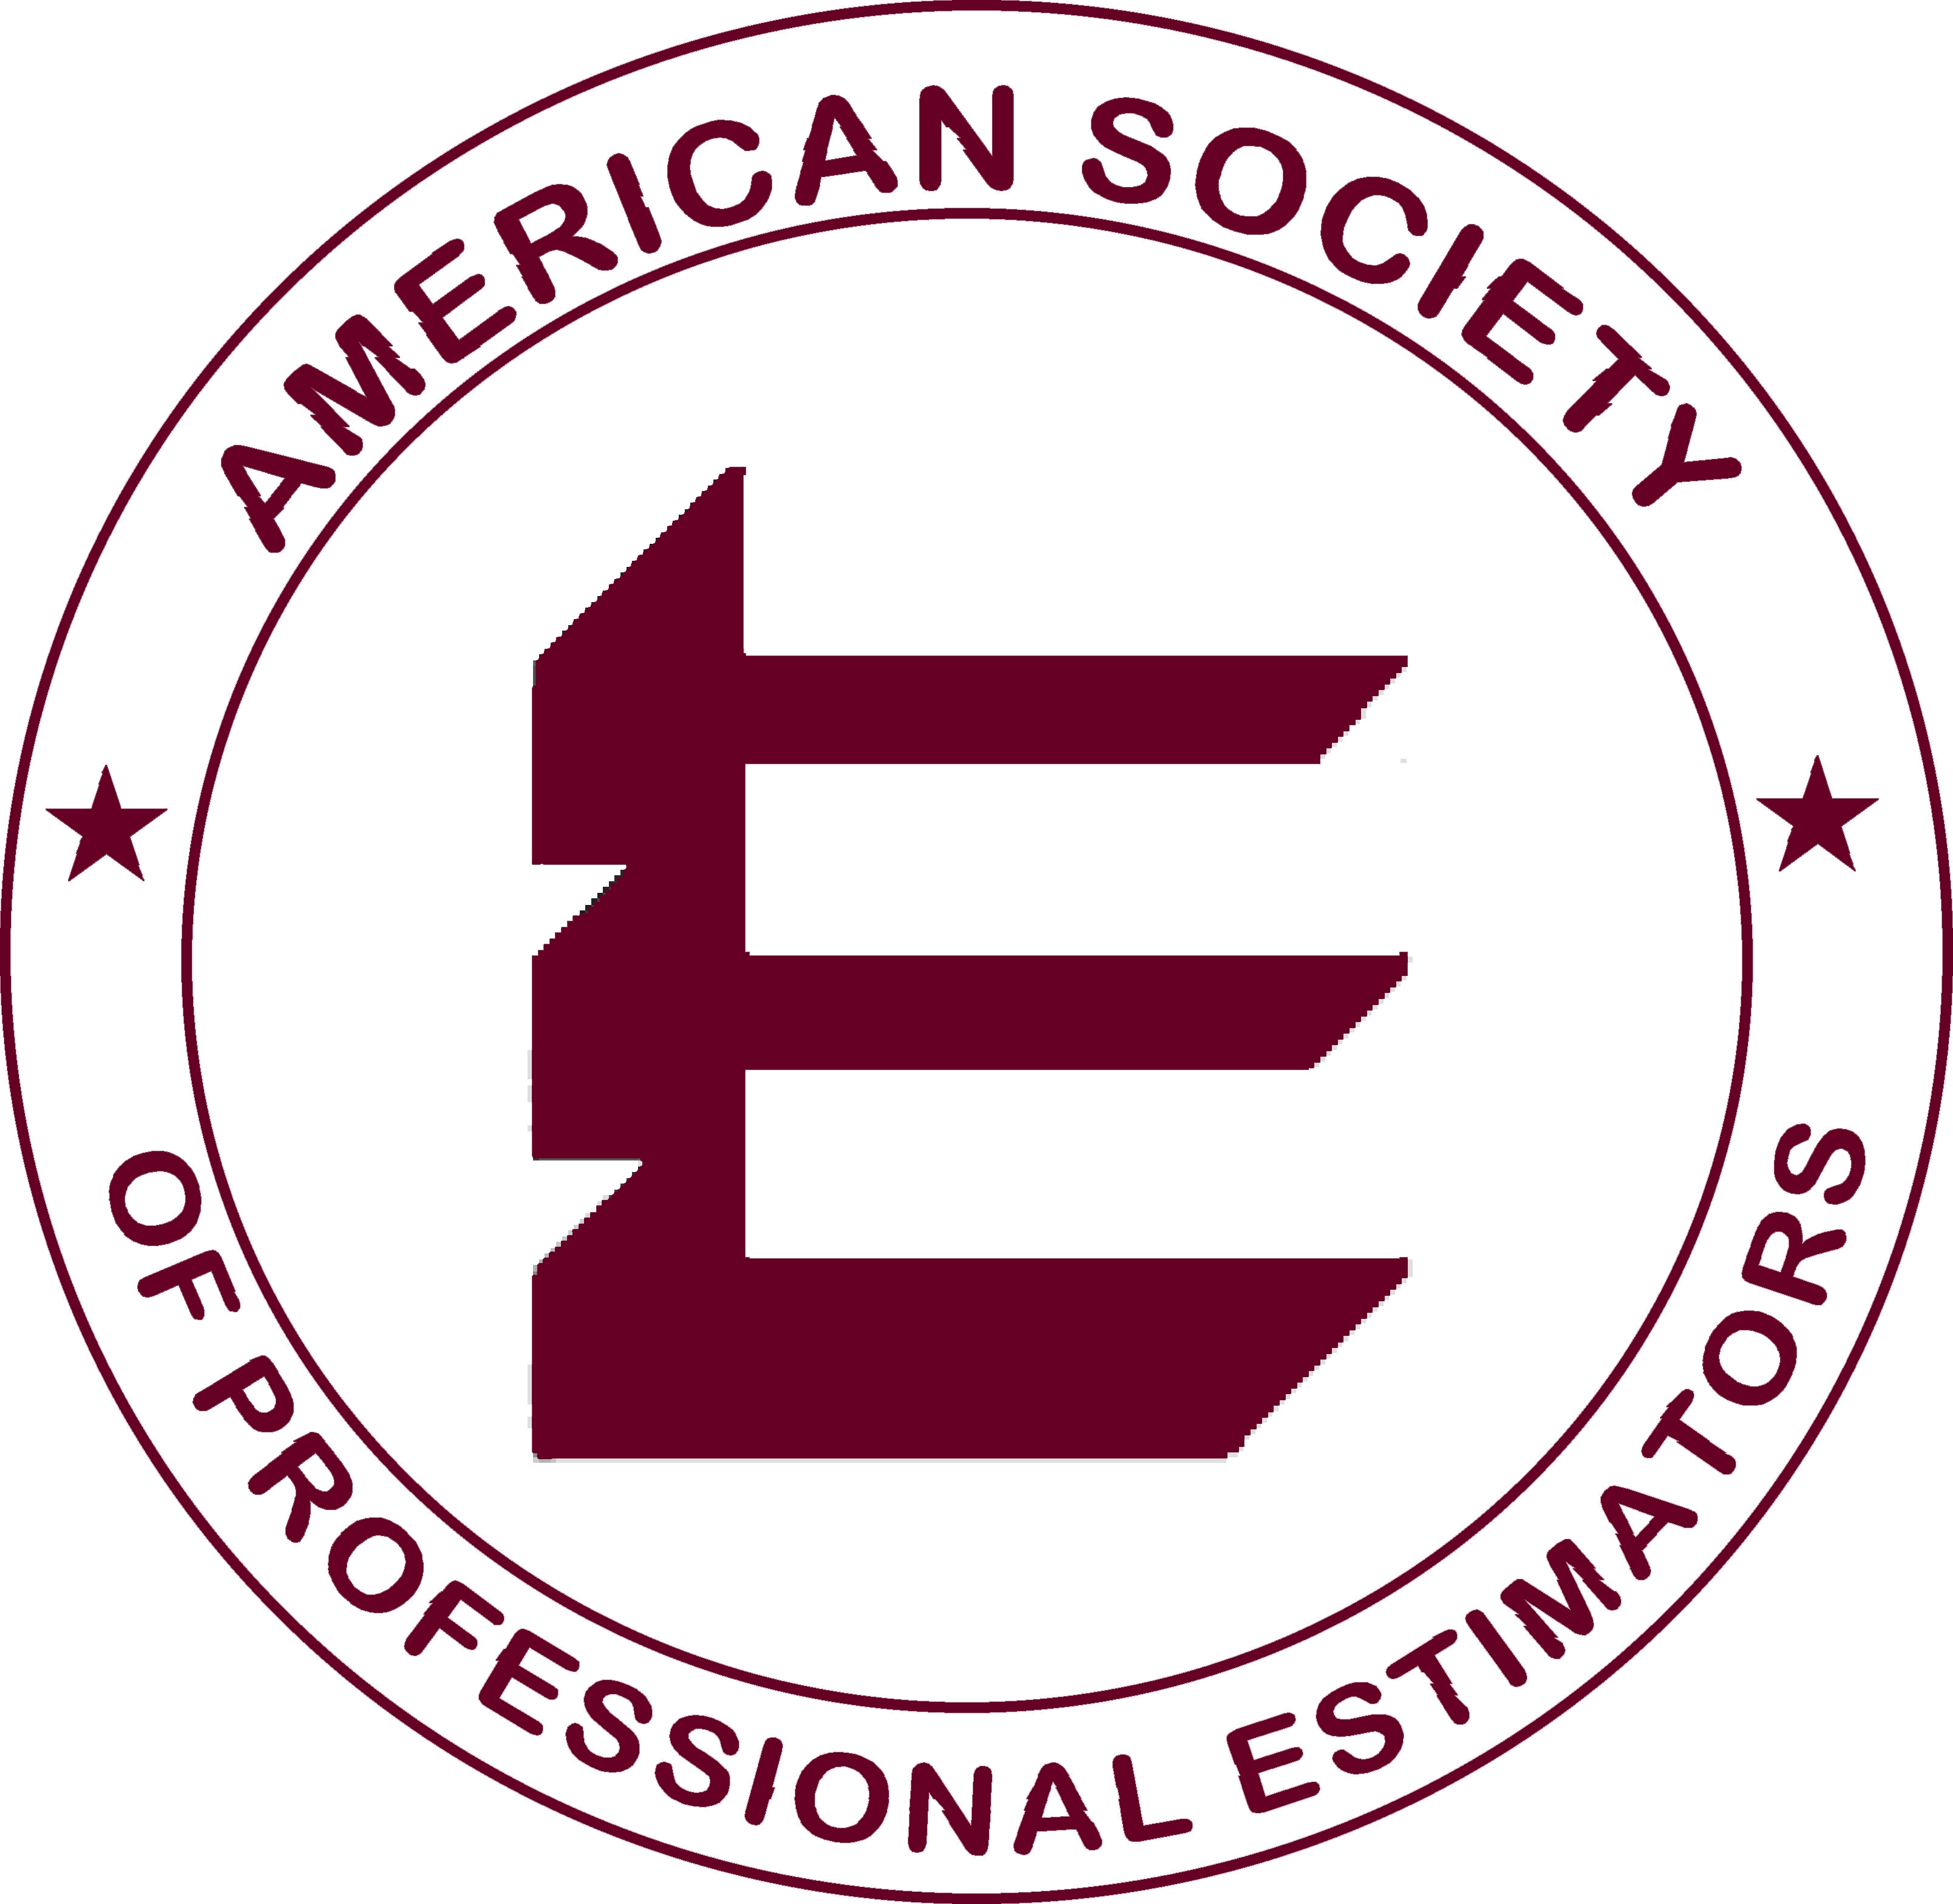 American Society of Professional Estimators